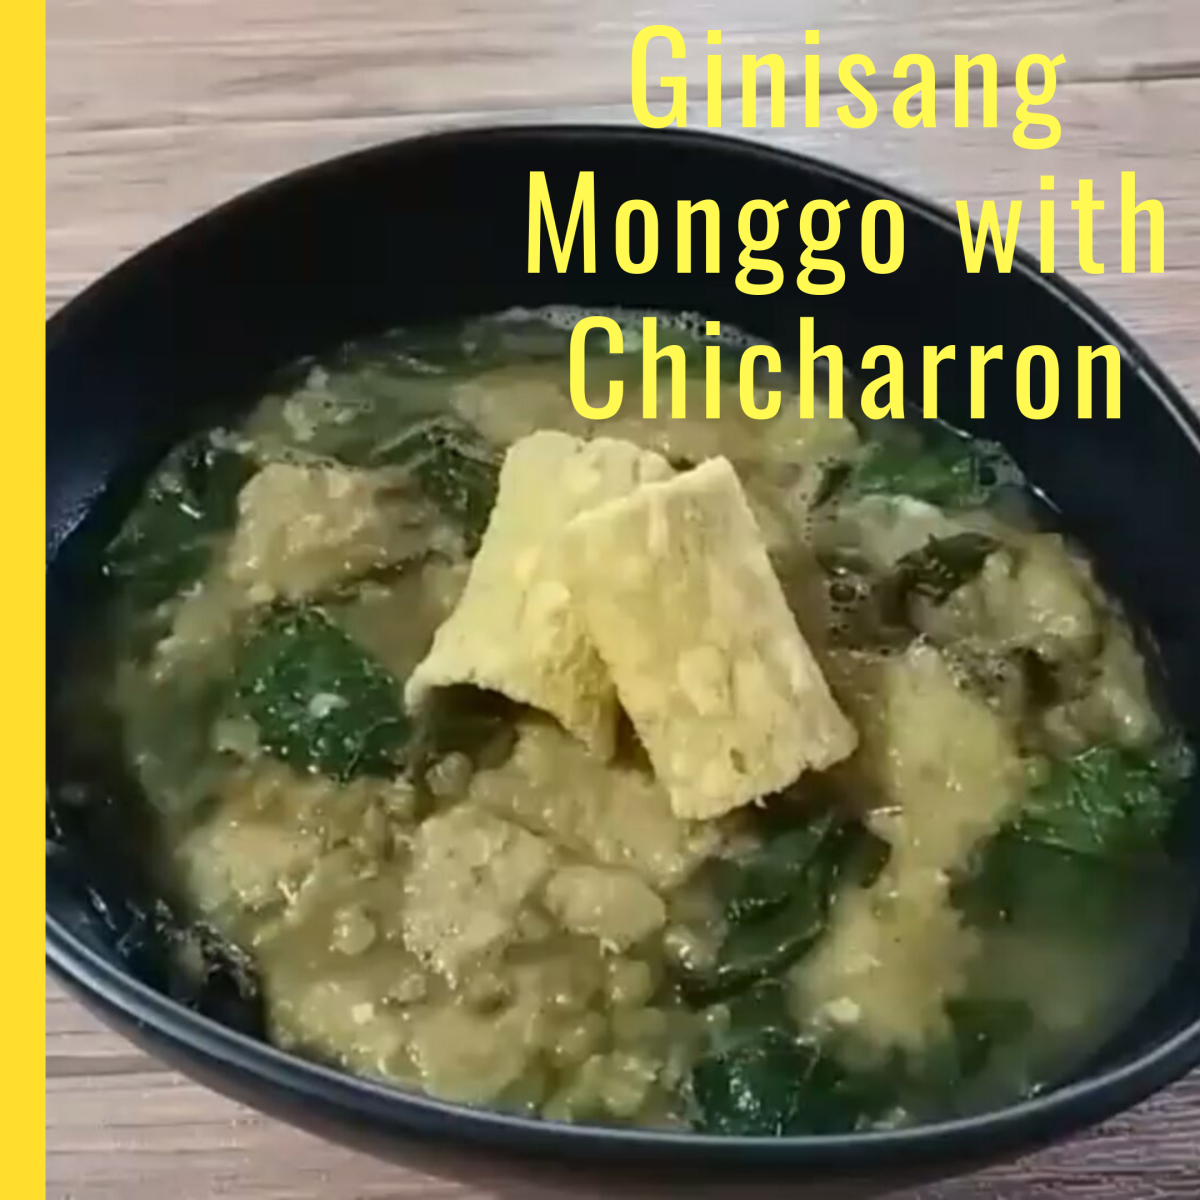 Learn how to cook ginisang monggo with chicharron